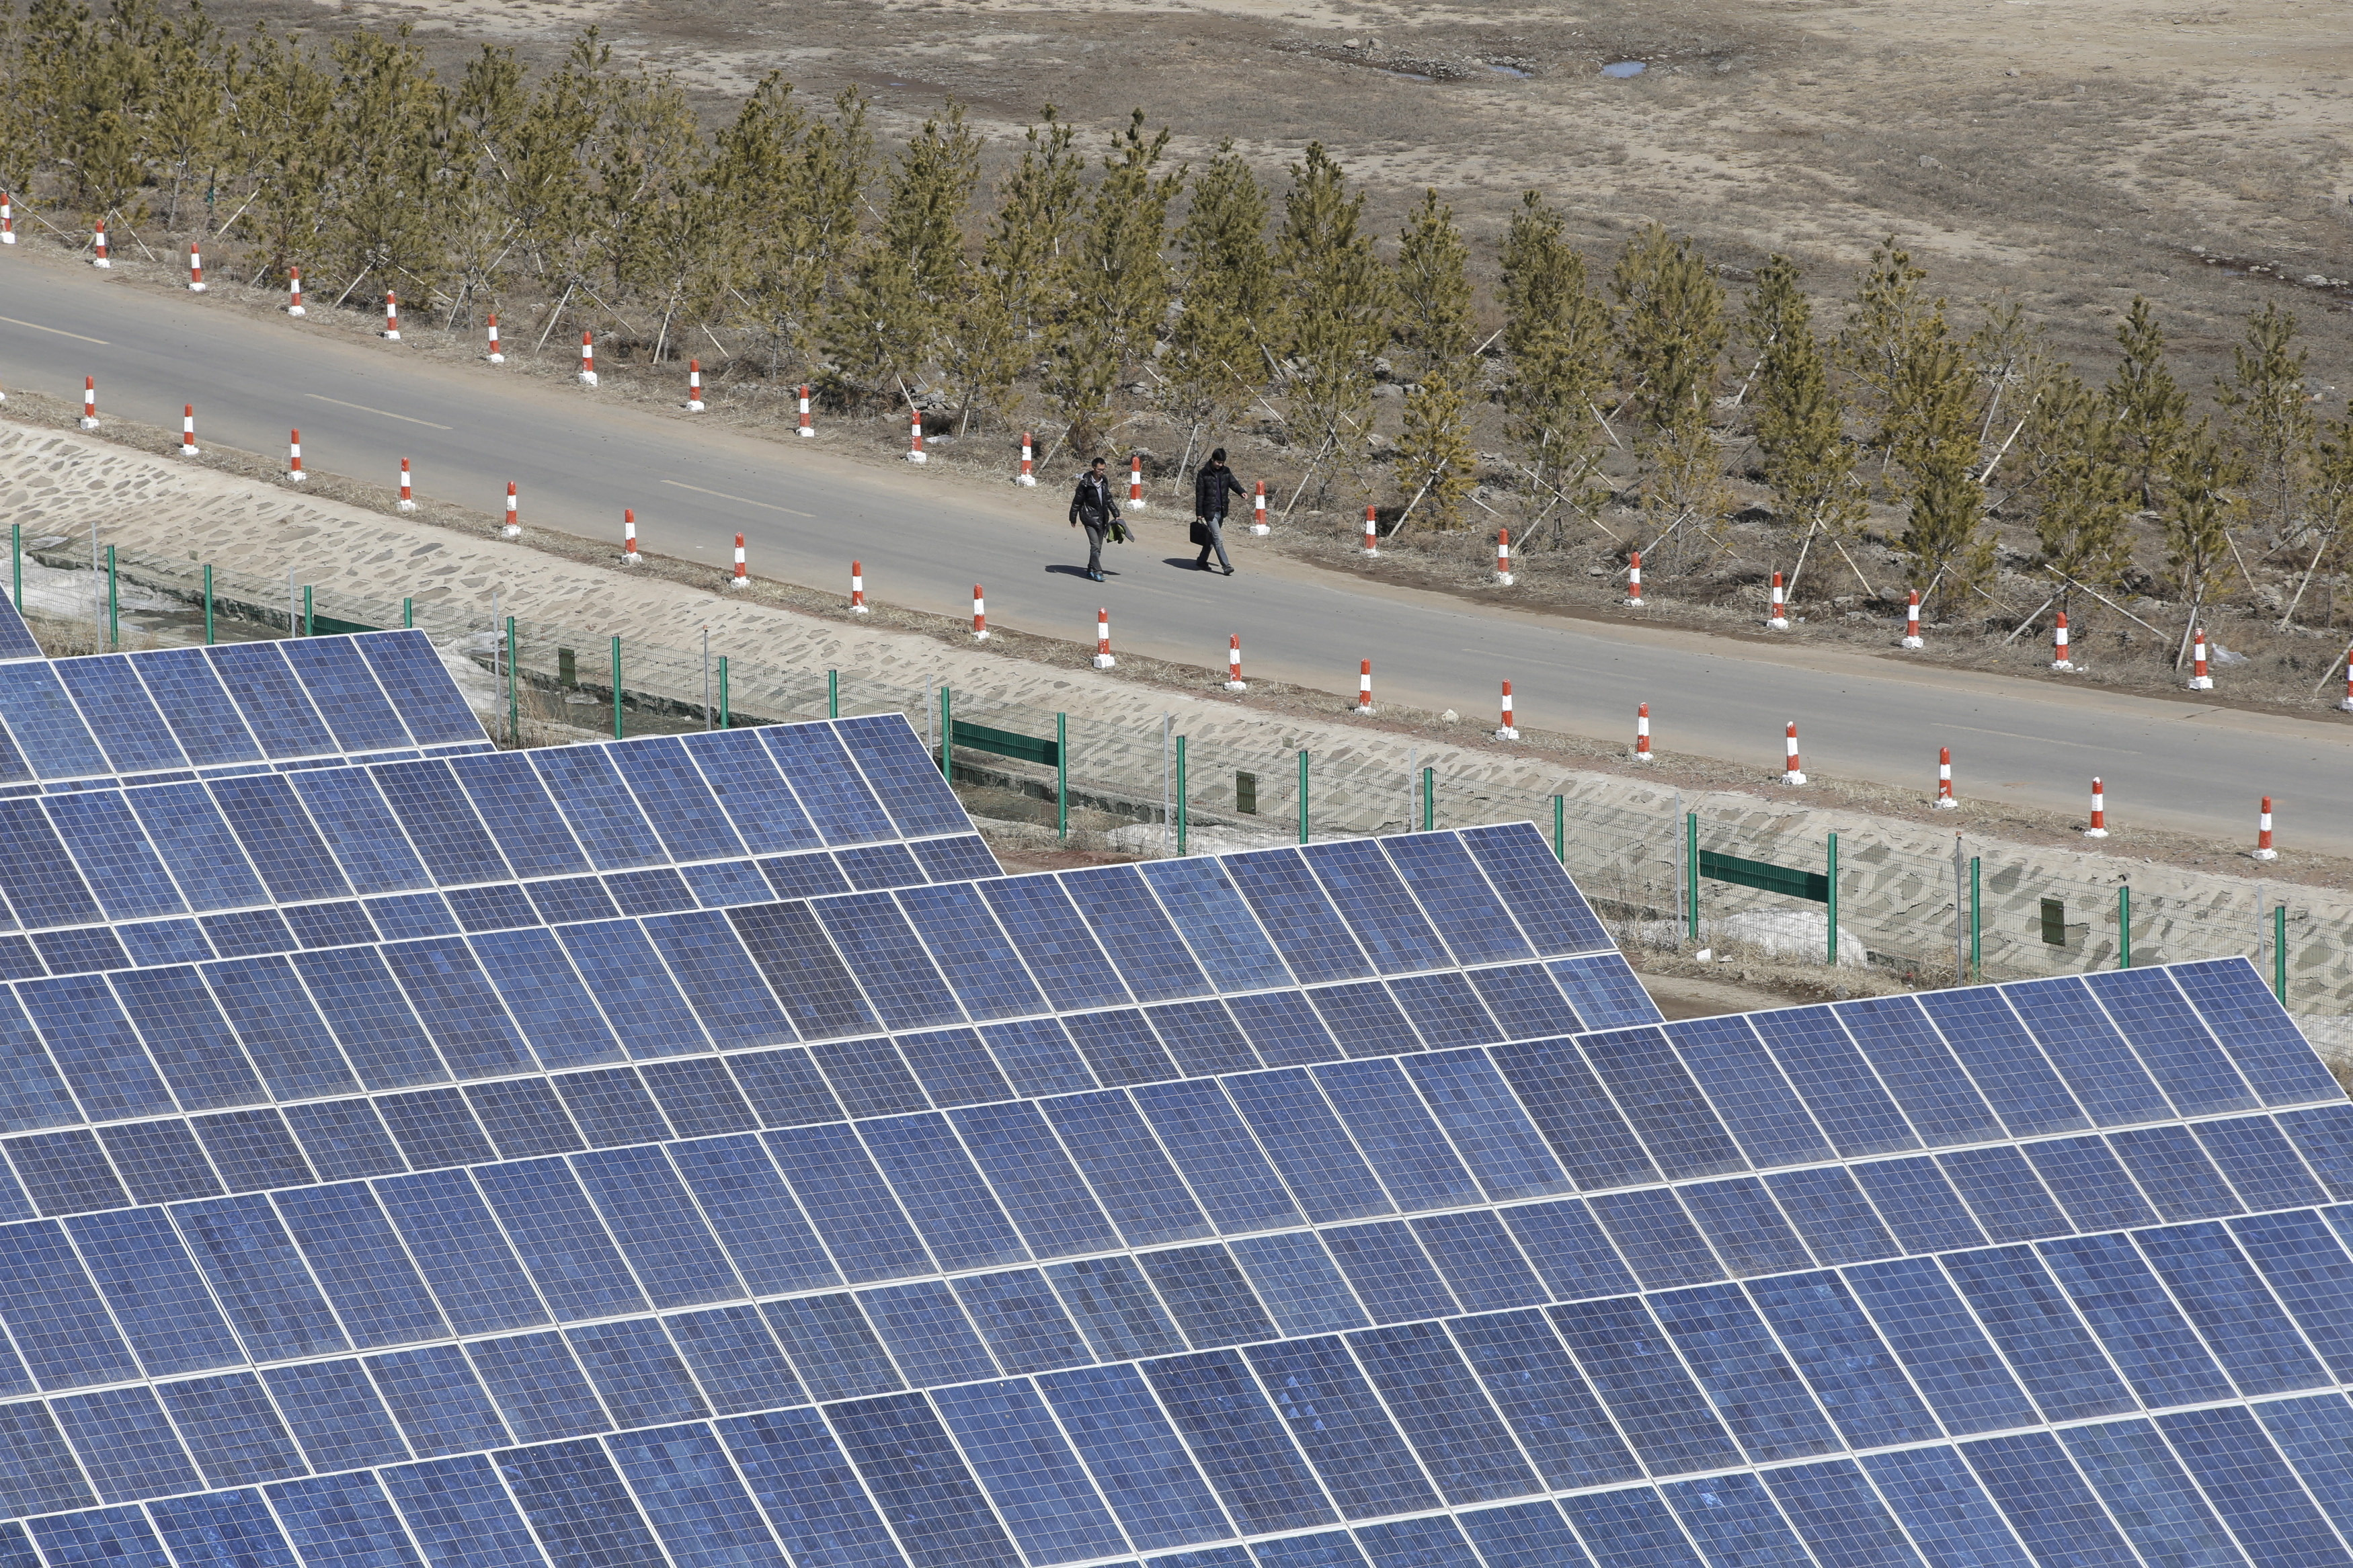 China's blistering solar power growth runs into grid blocks